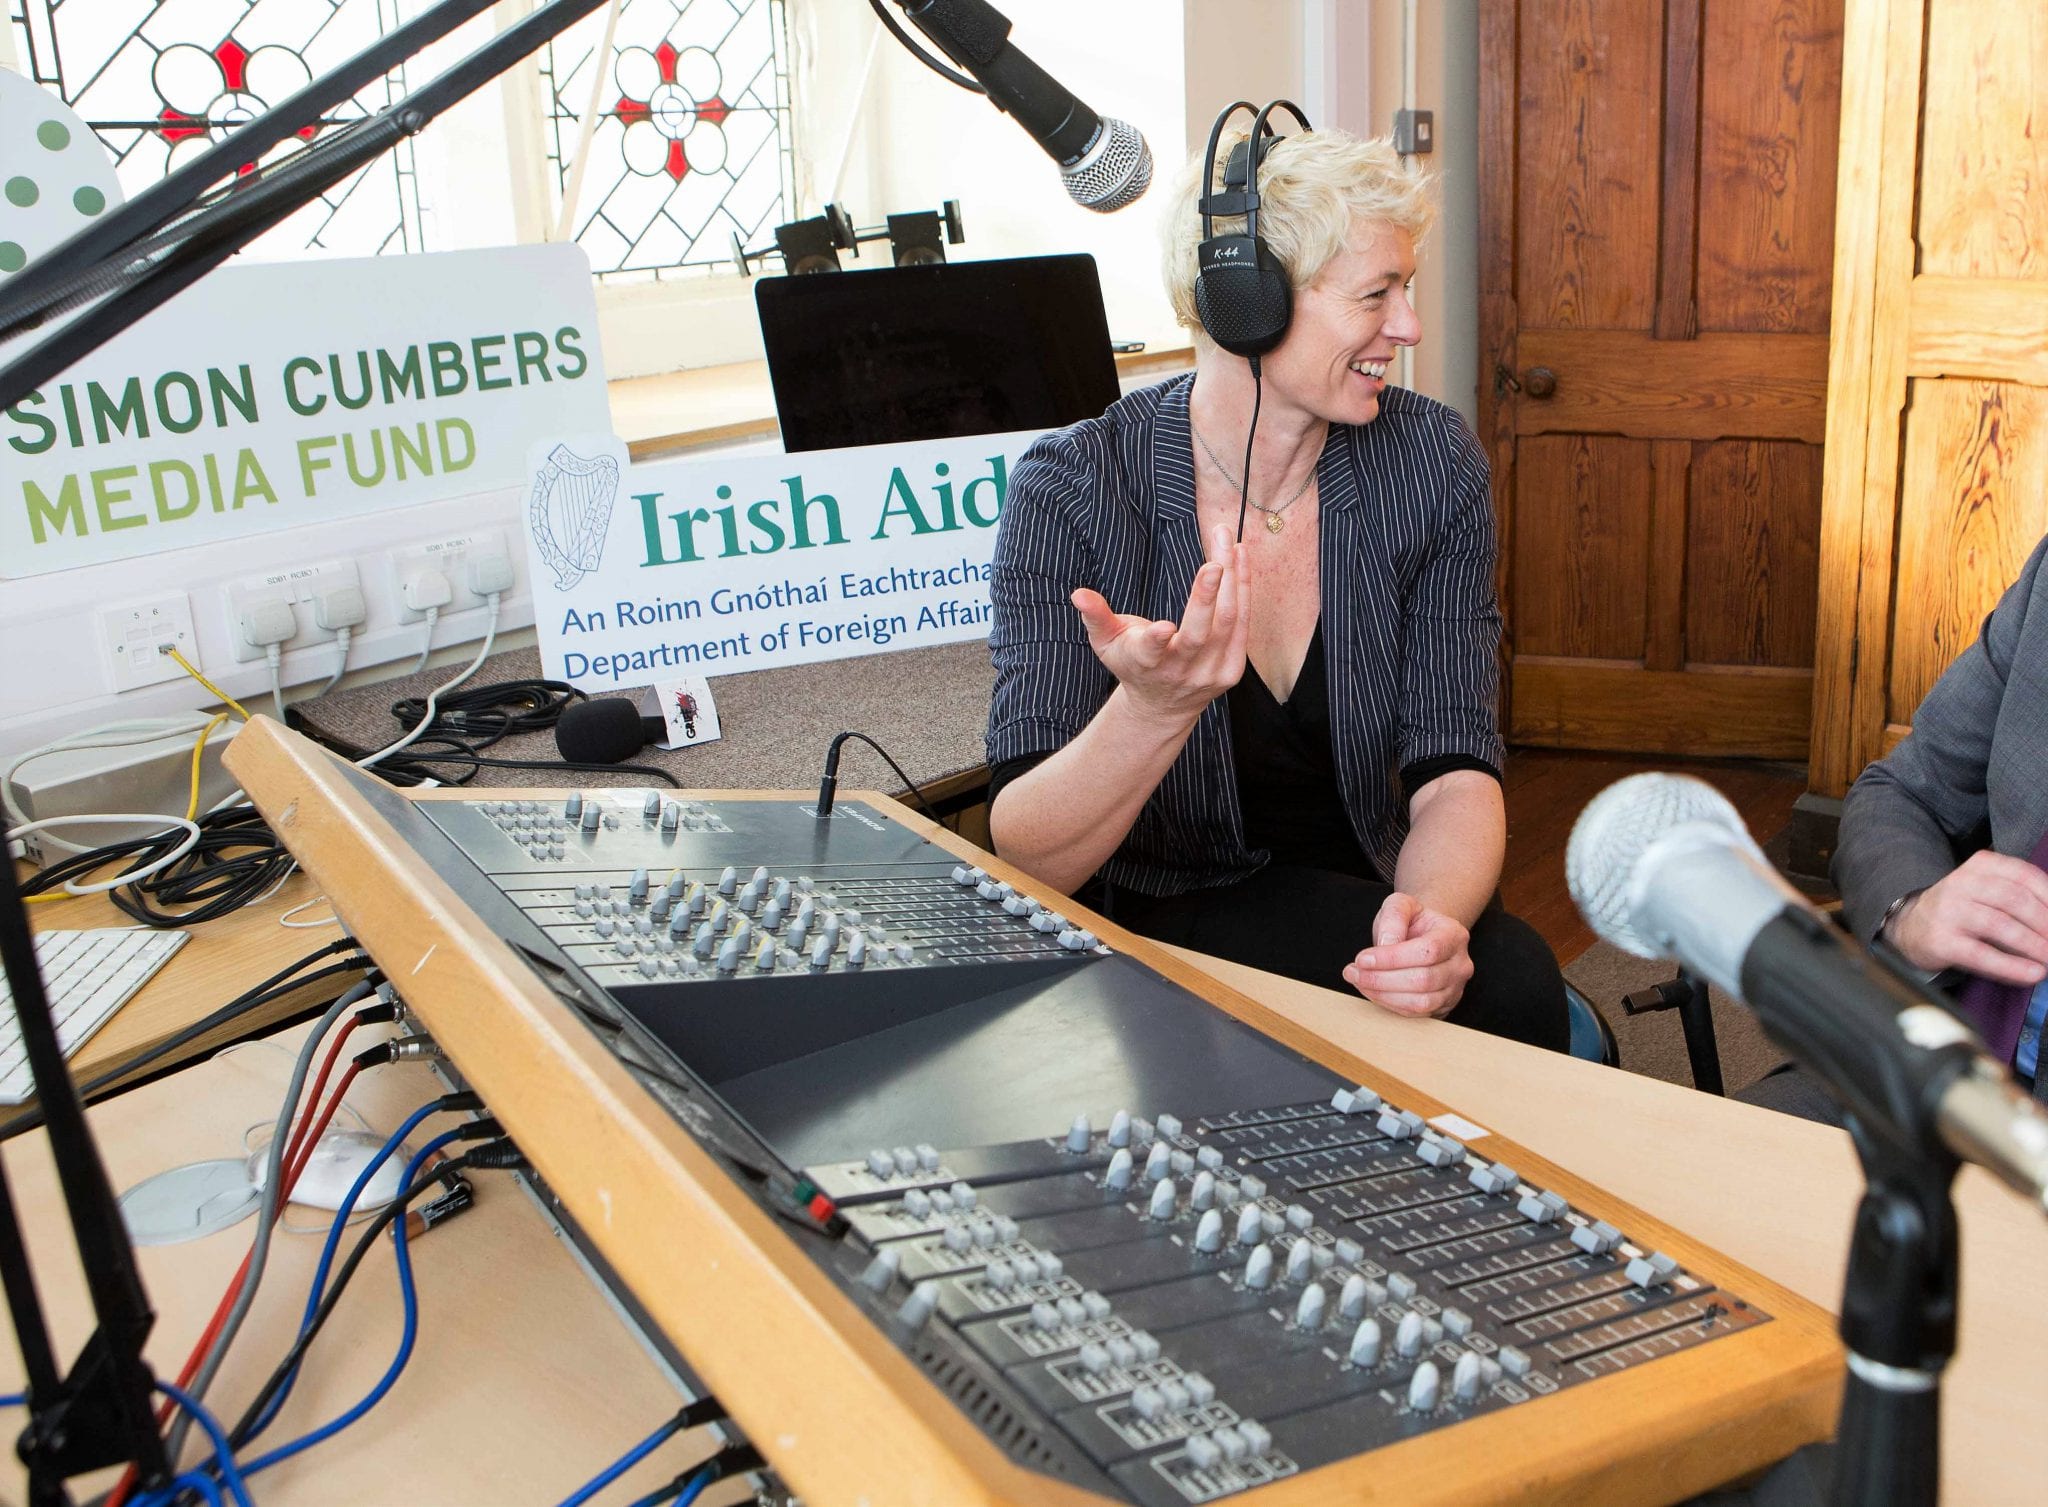 Simon Cumbers Media Fund for Irish Media Professionals 2018 (Winter Season Round)